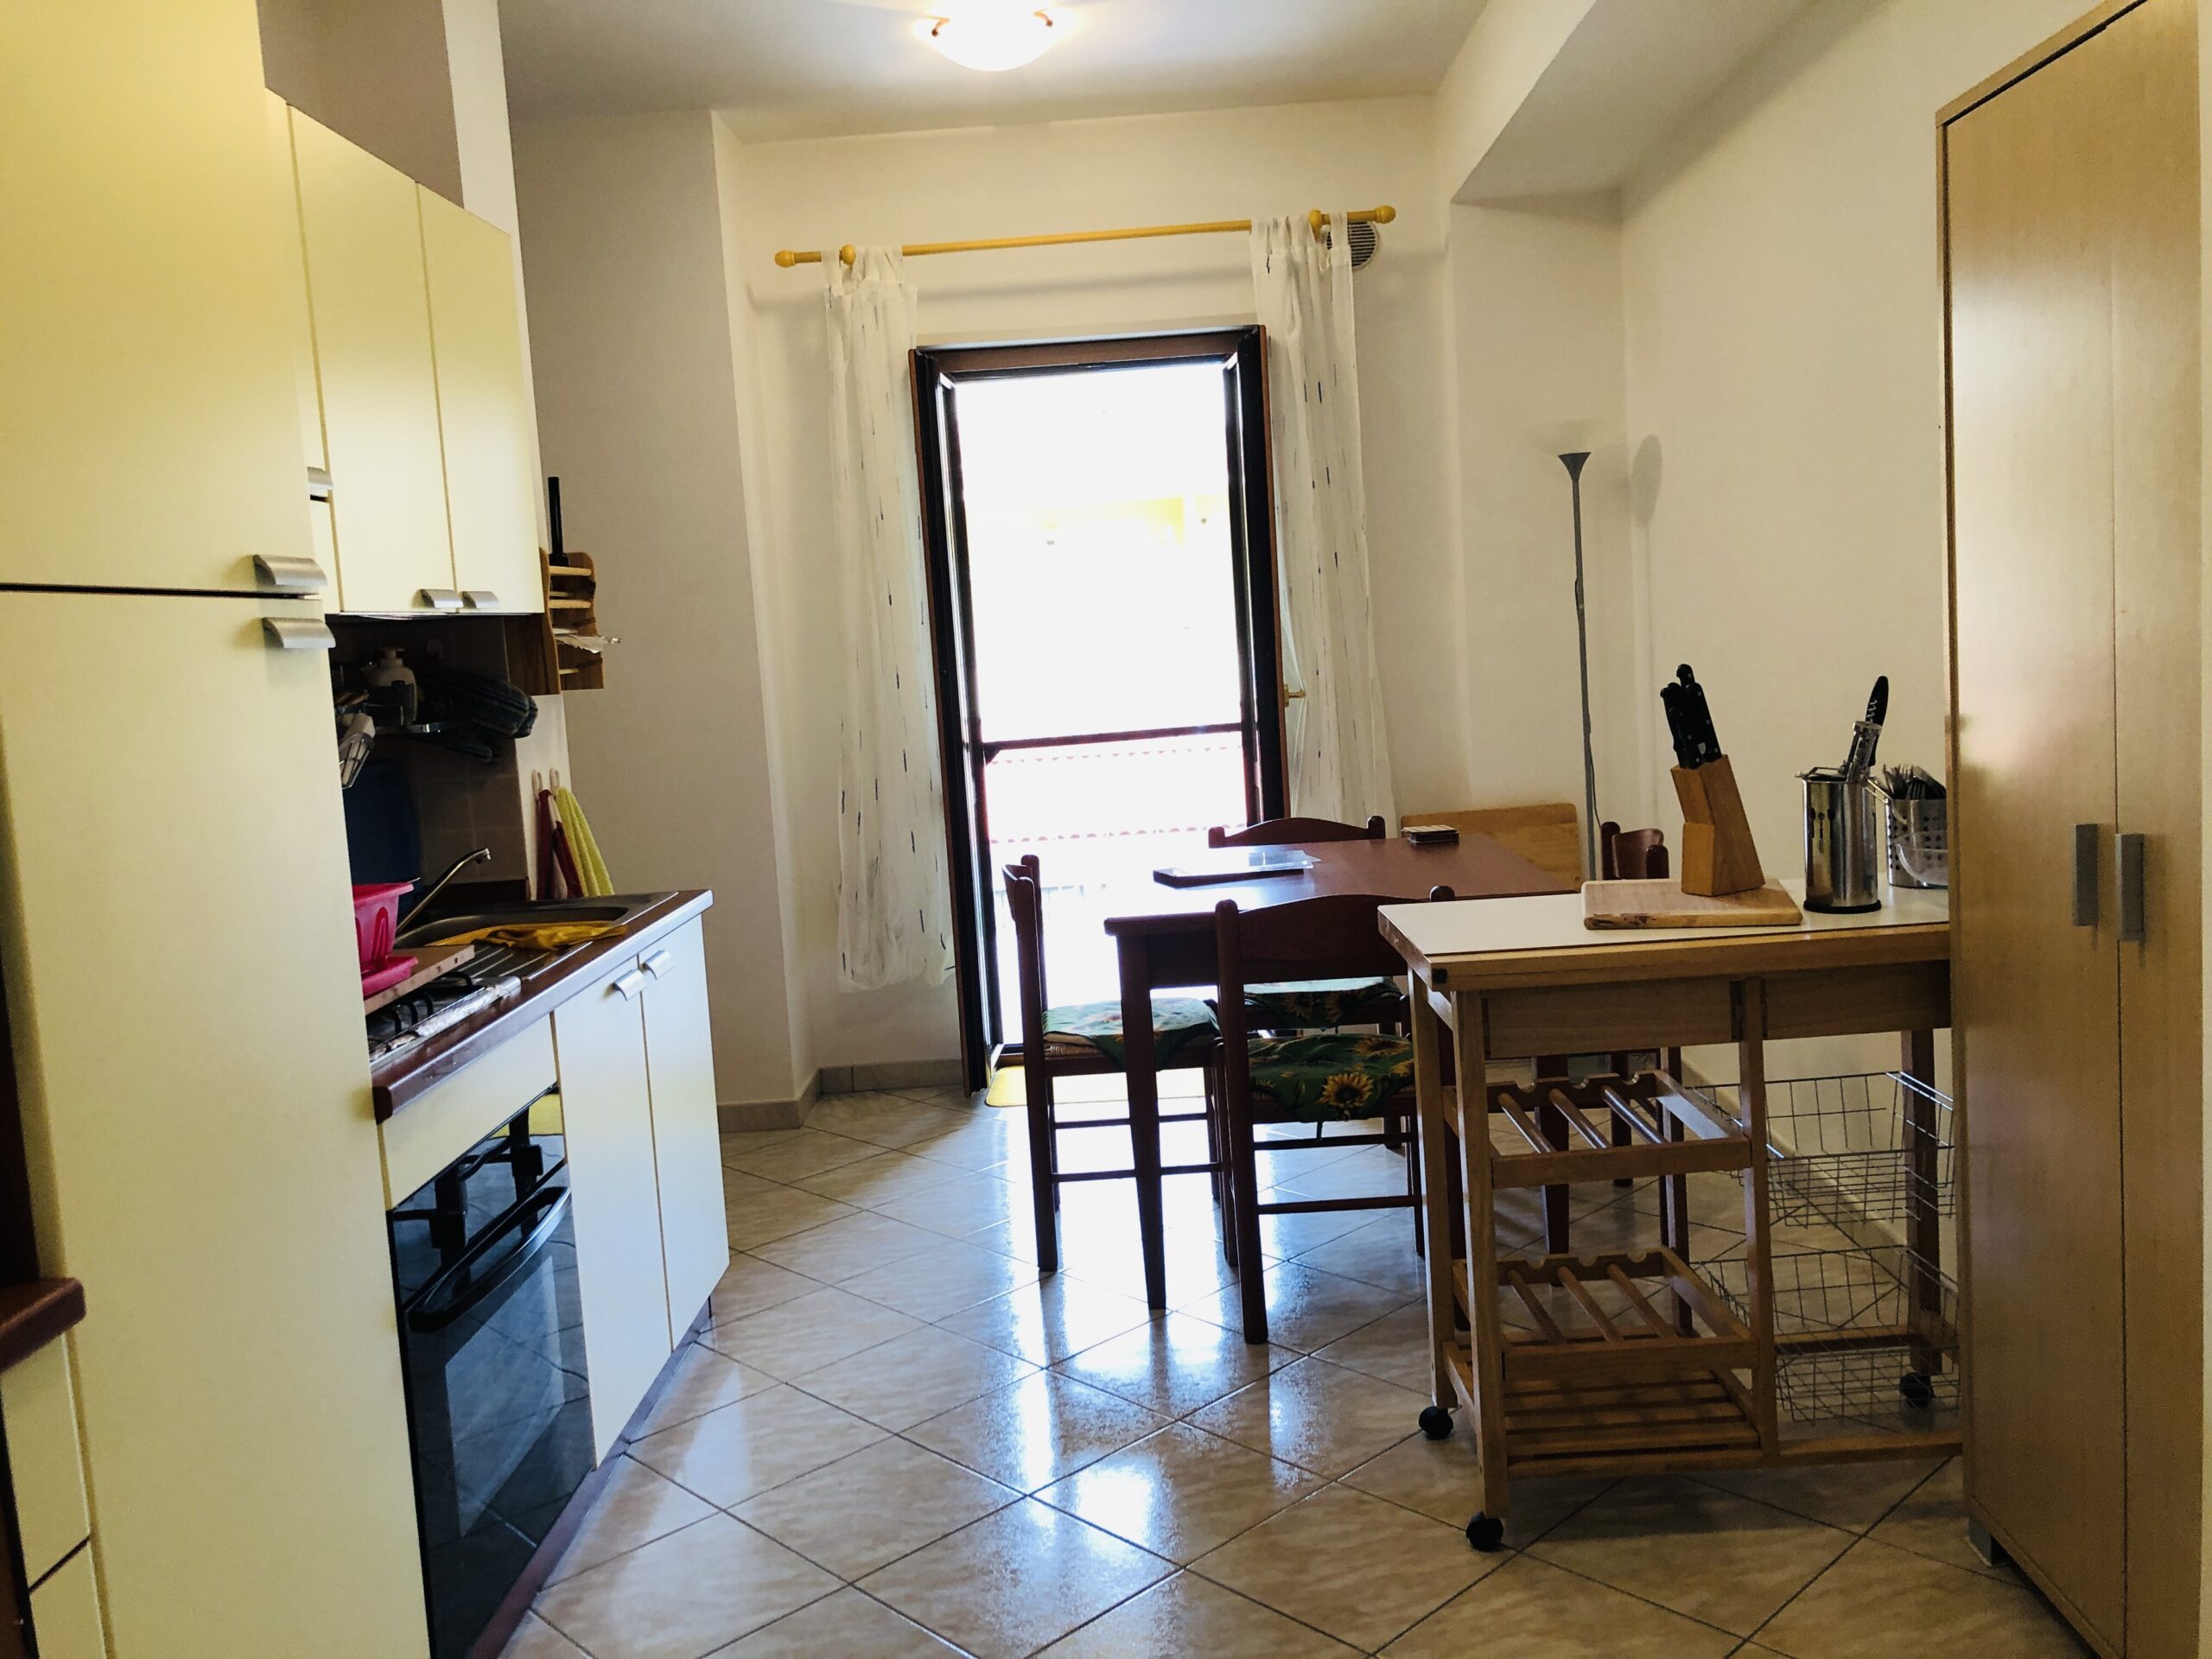 La Marinella, Pizzo- 2 bedroom, 2 bathroom apartment